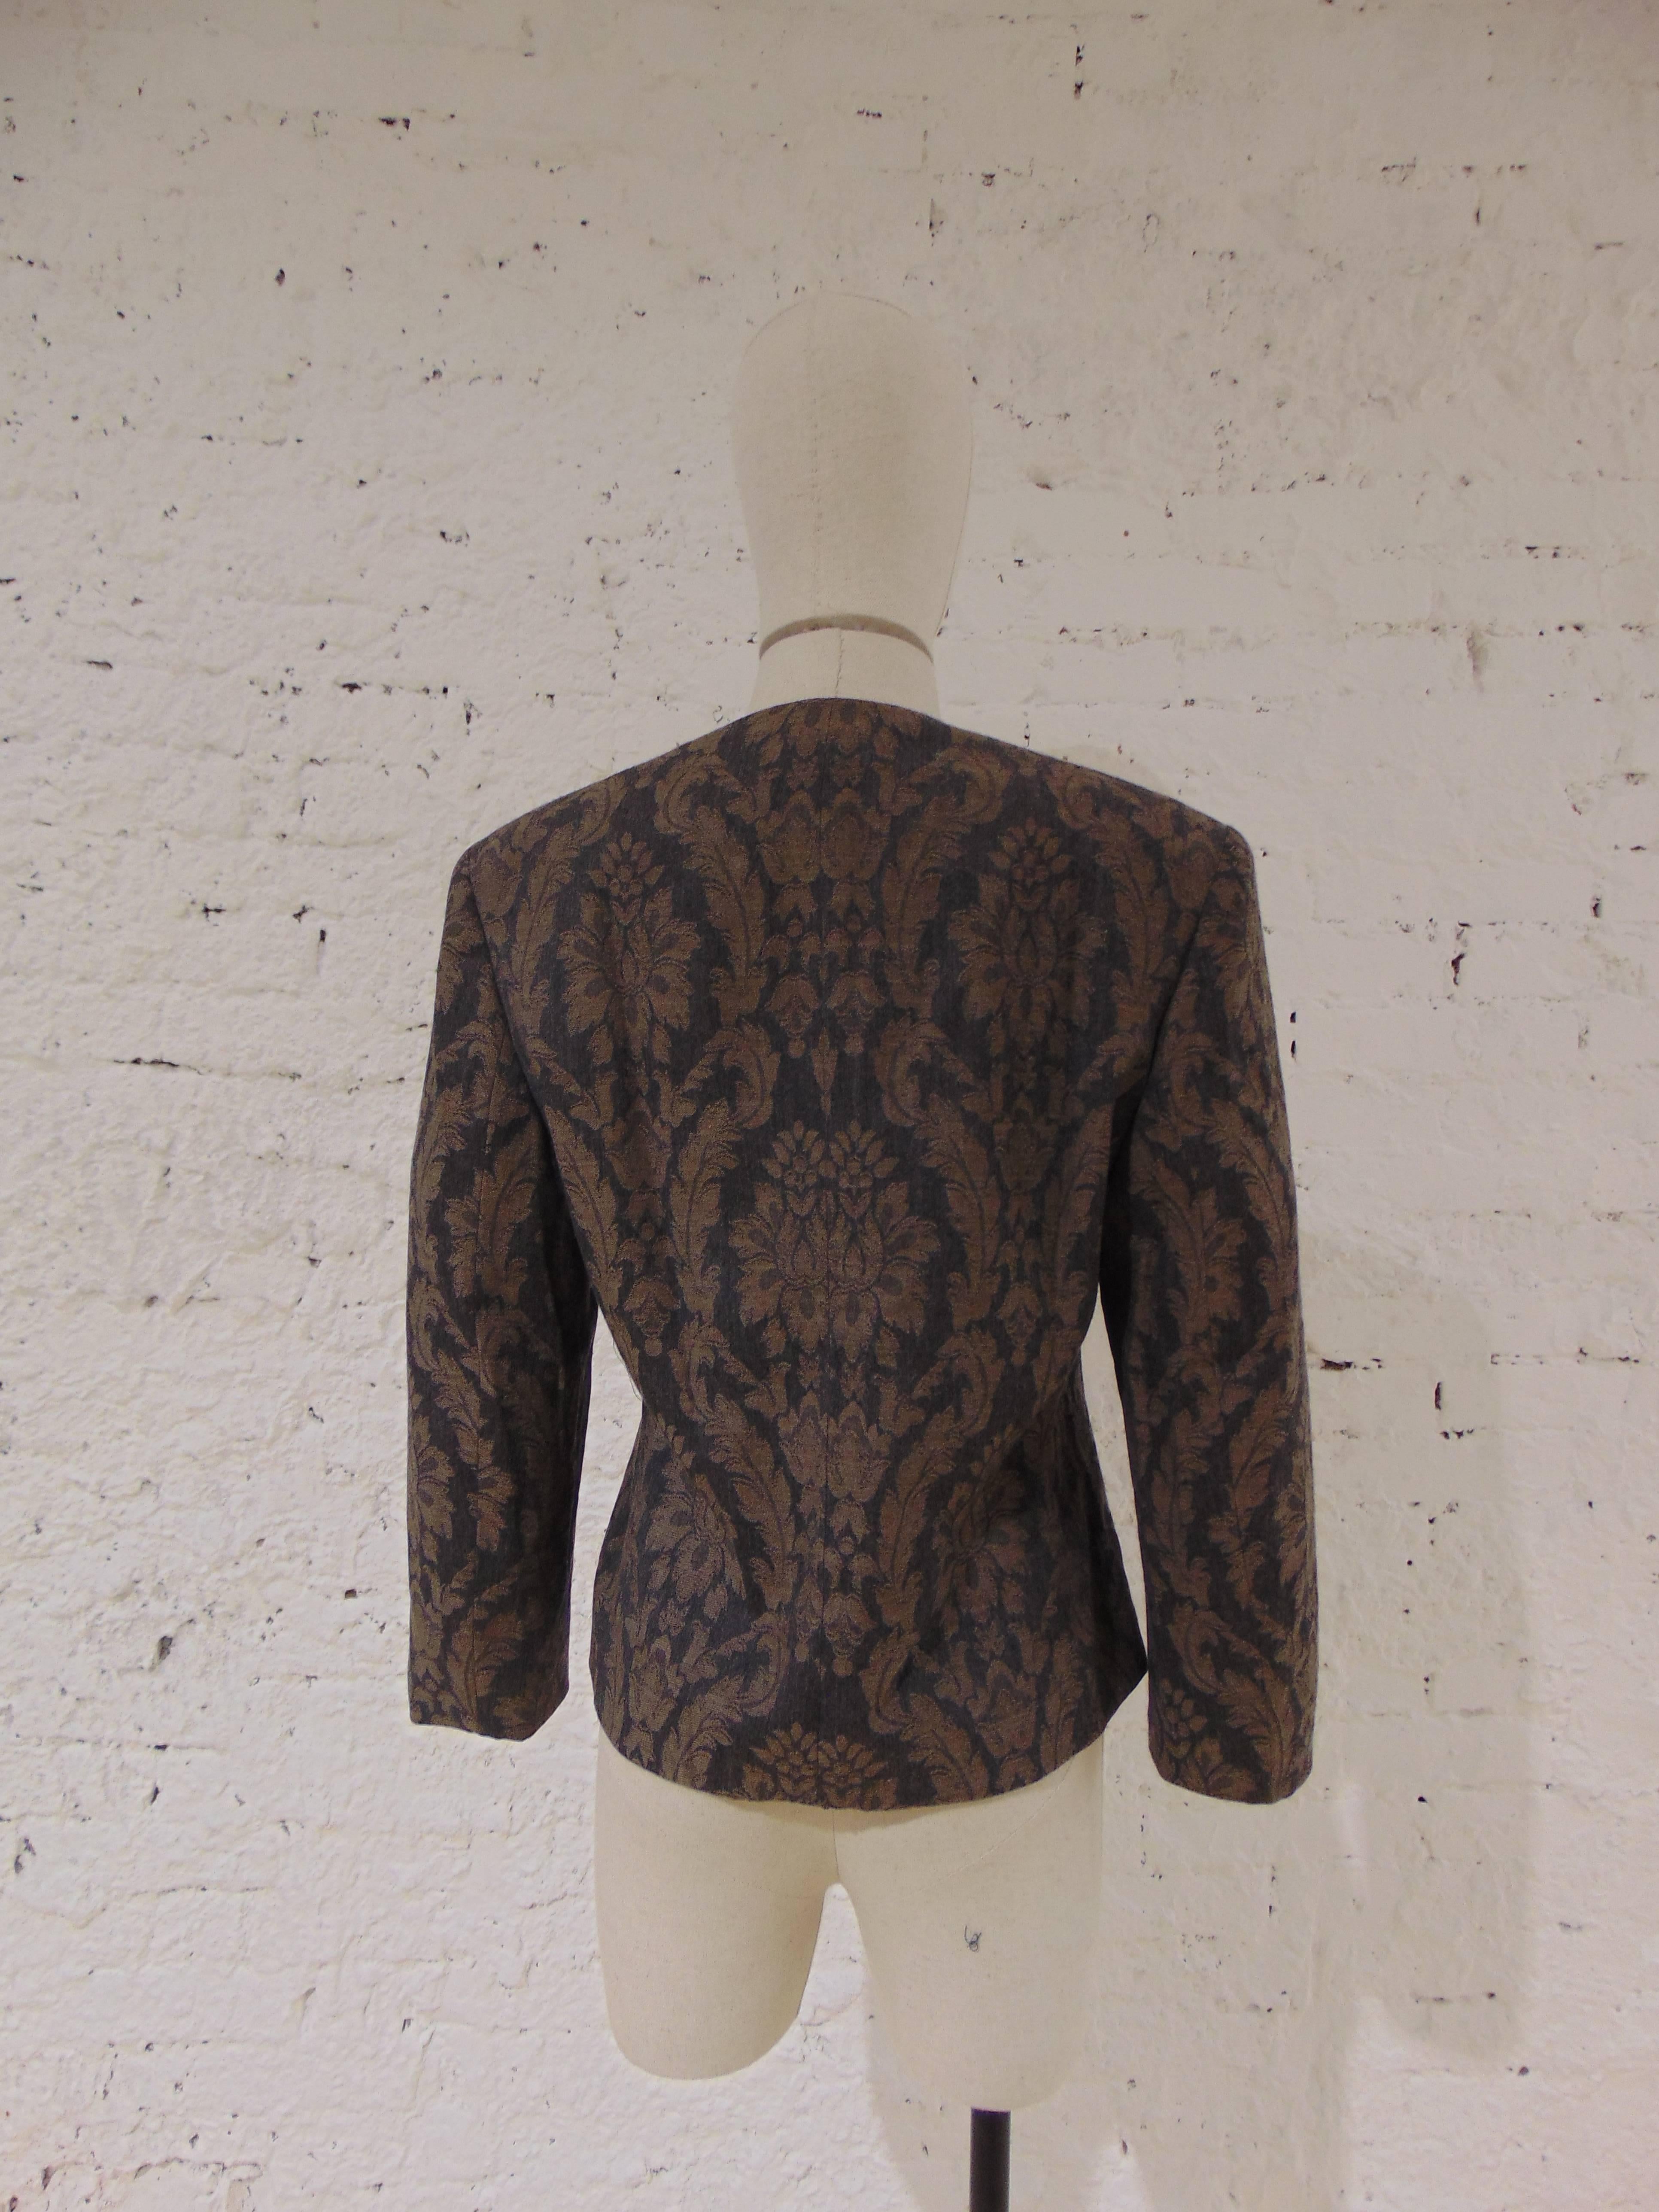 Salvatore Ferragamo Wool Jacket In Excellent Condition For Sale In Capri, IT